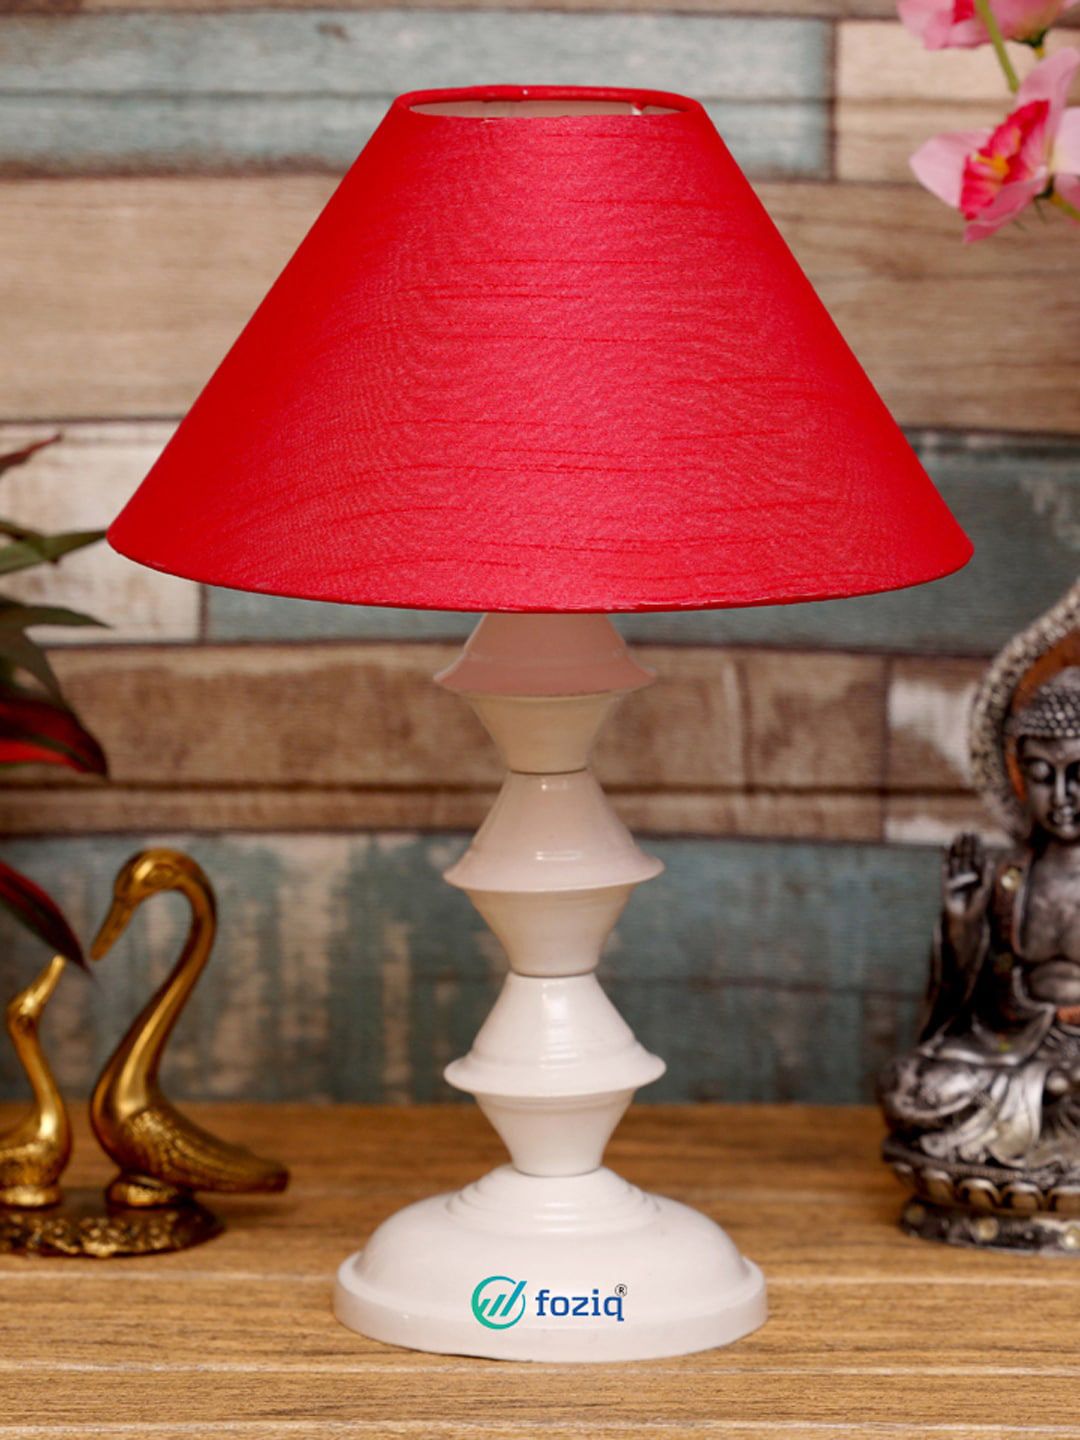 foziq White Solid Contemporary Table Lamps Price in India